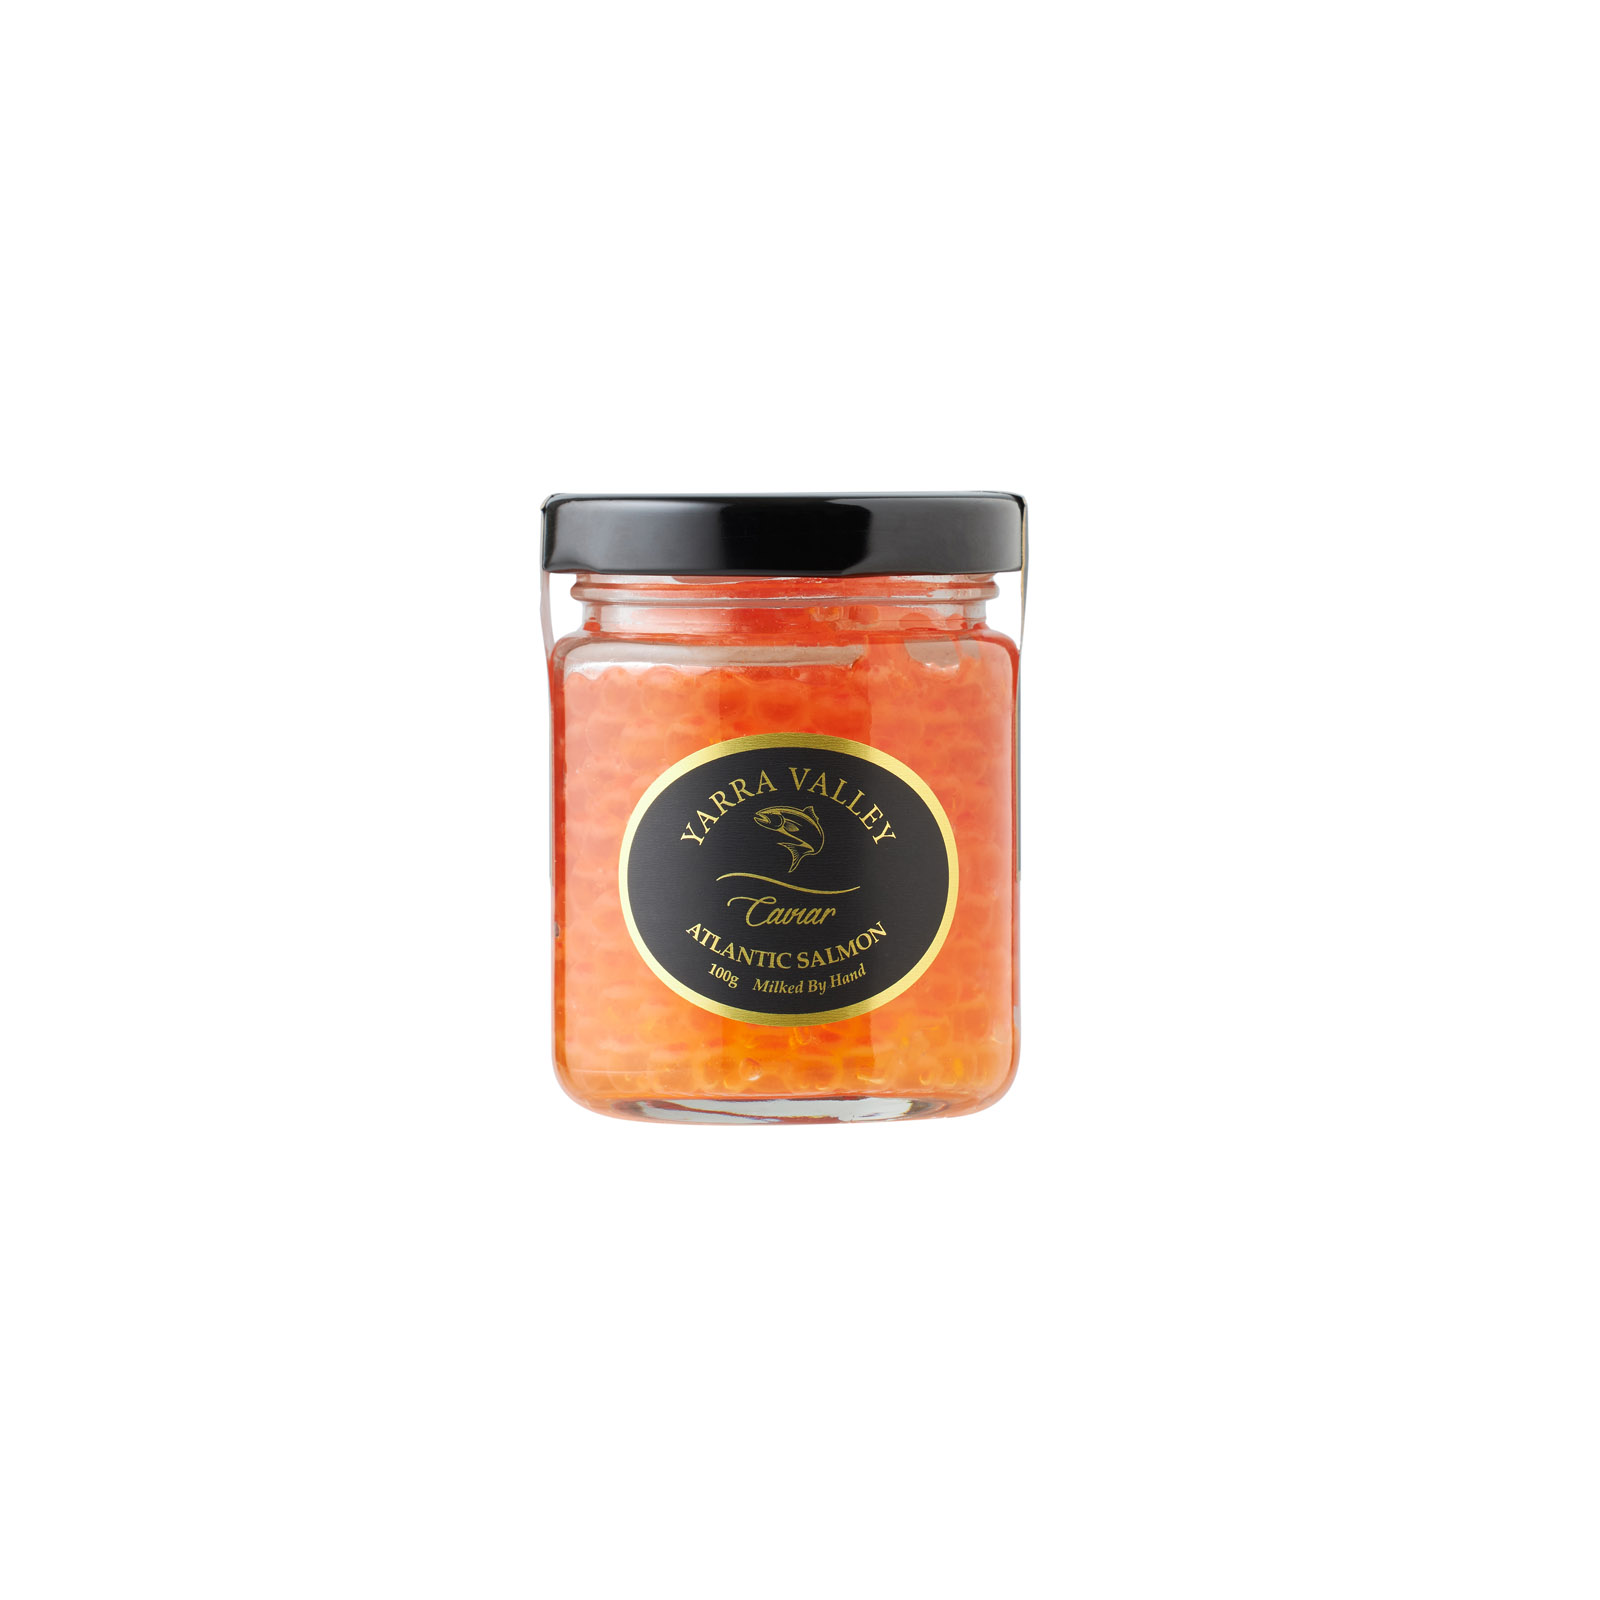 Buy 100g Jars of Salmon Caviar Online Today